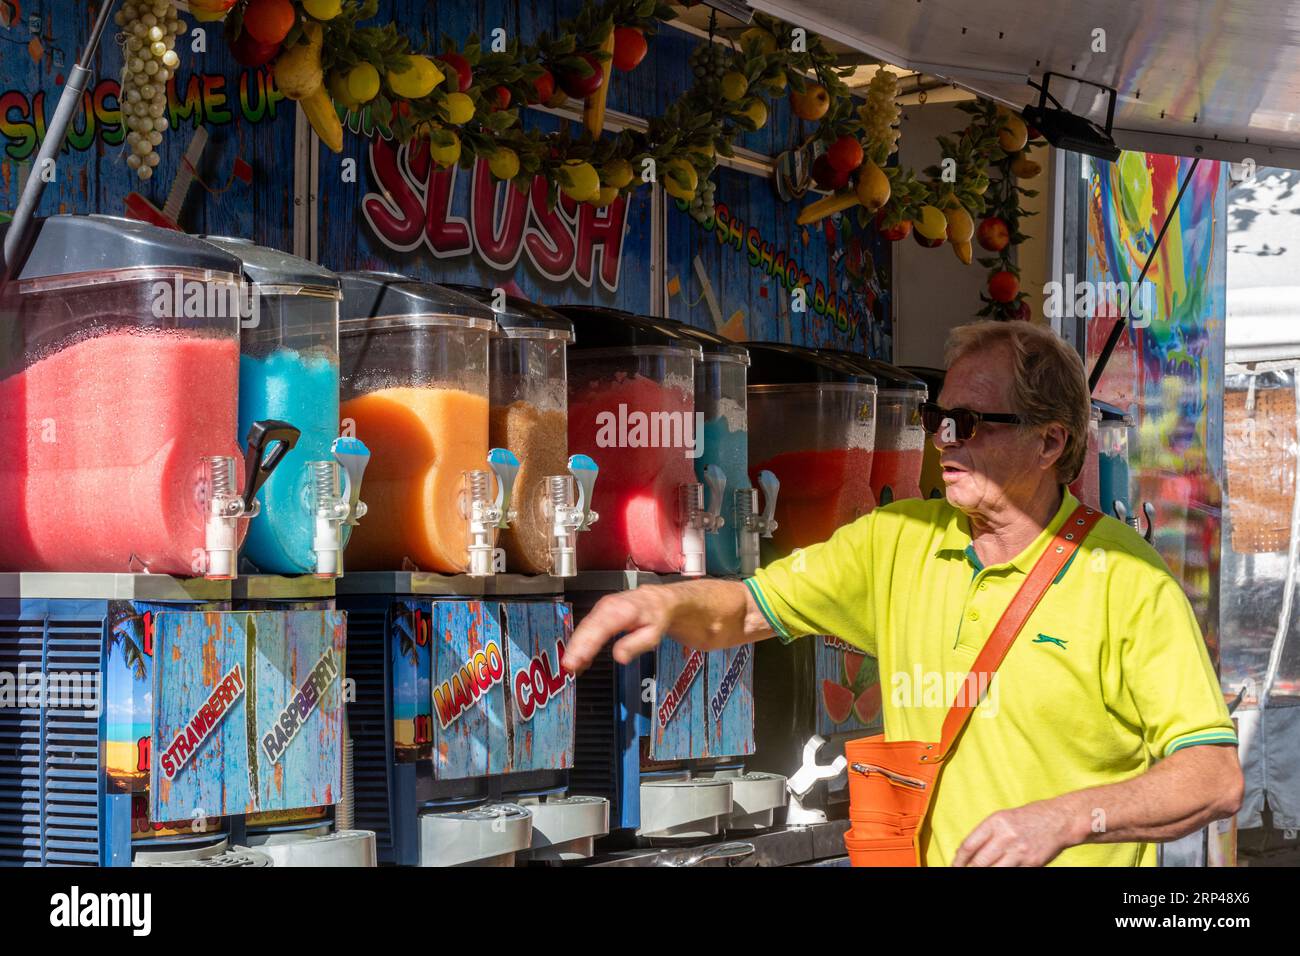 Slush stand with man selling colourful ice cold slushy fruit drinks at a market in Surrey, England, UK Stock Photo